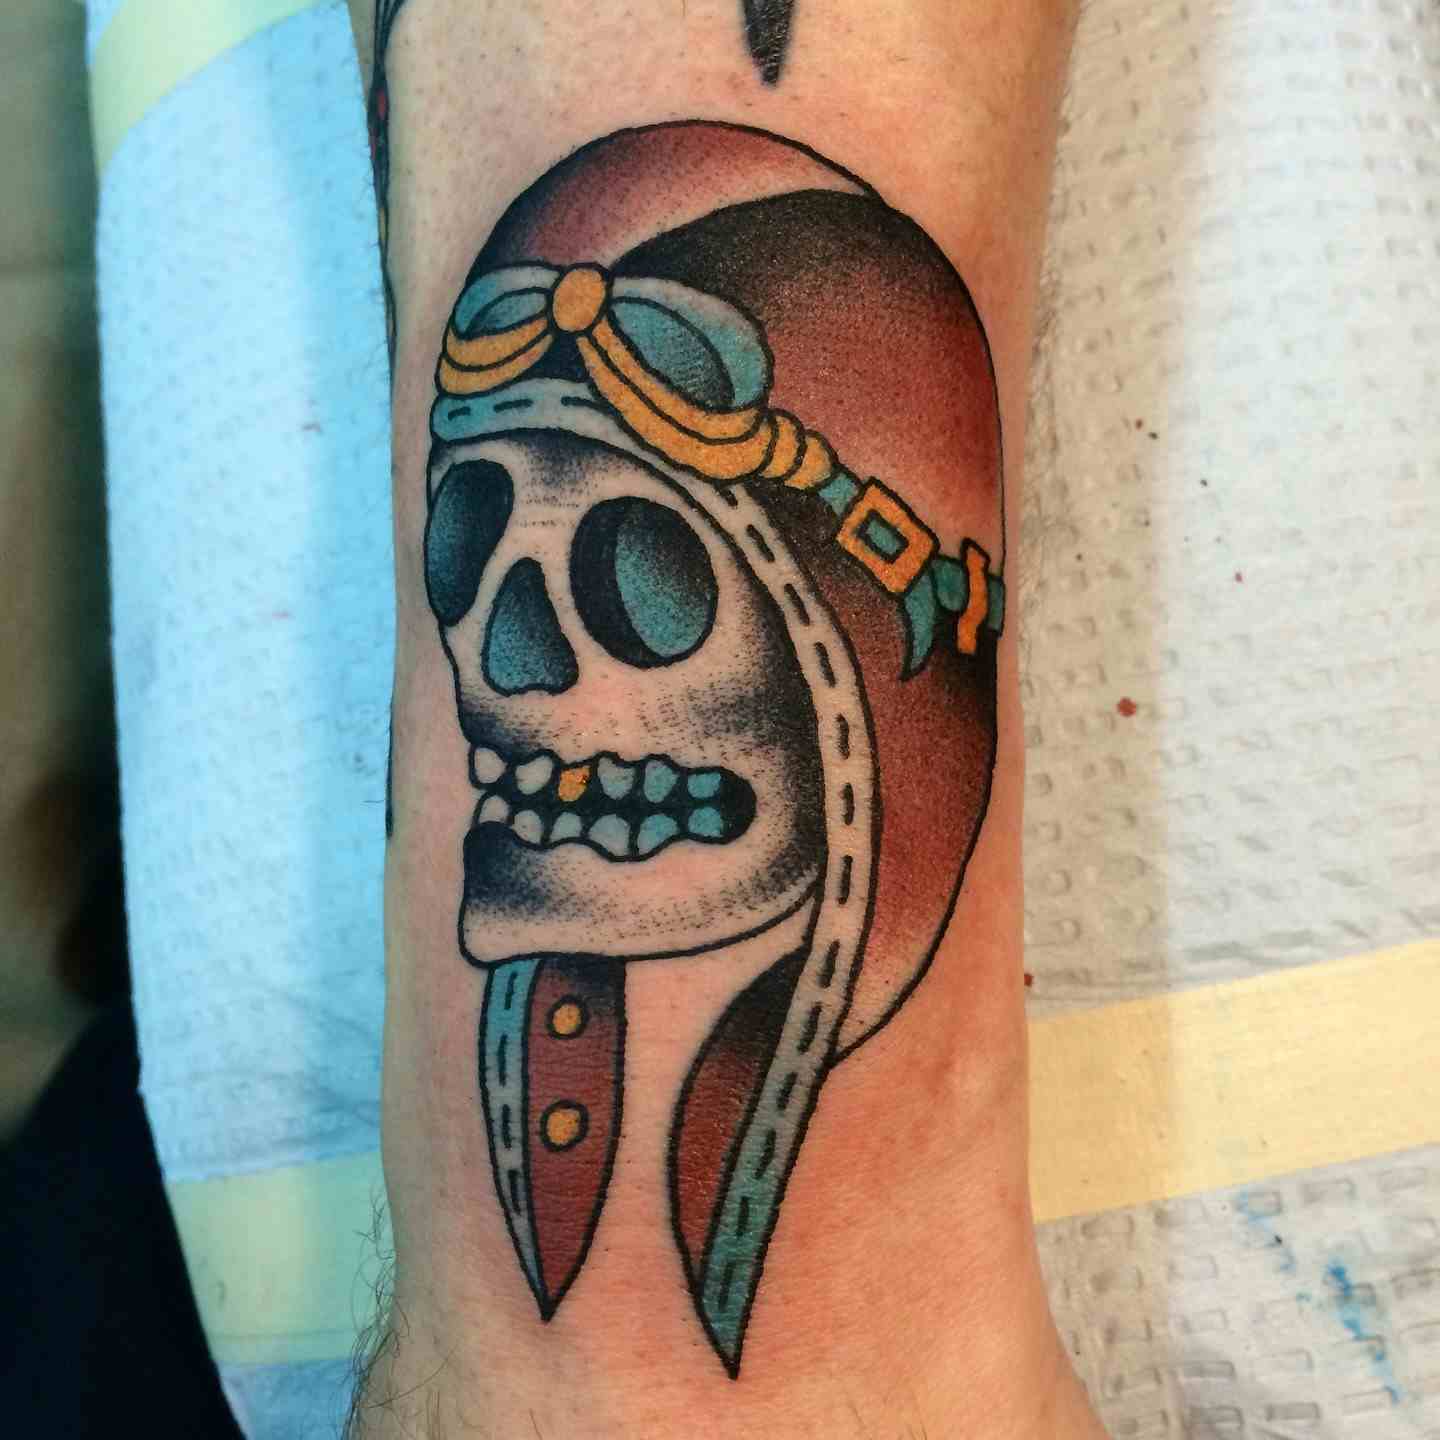 Aviator skull tattoo